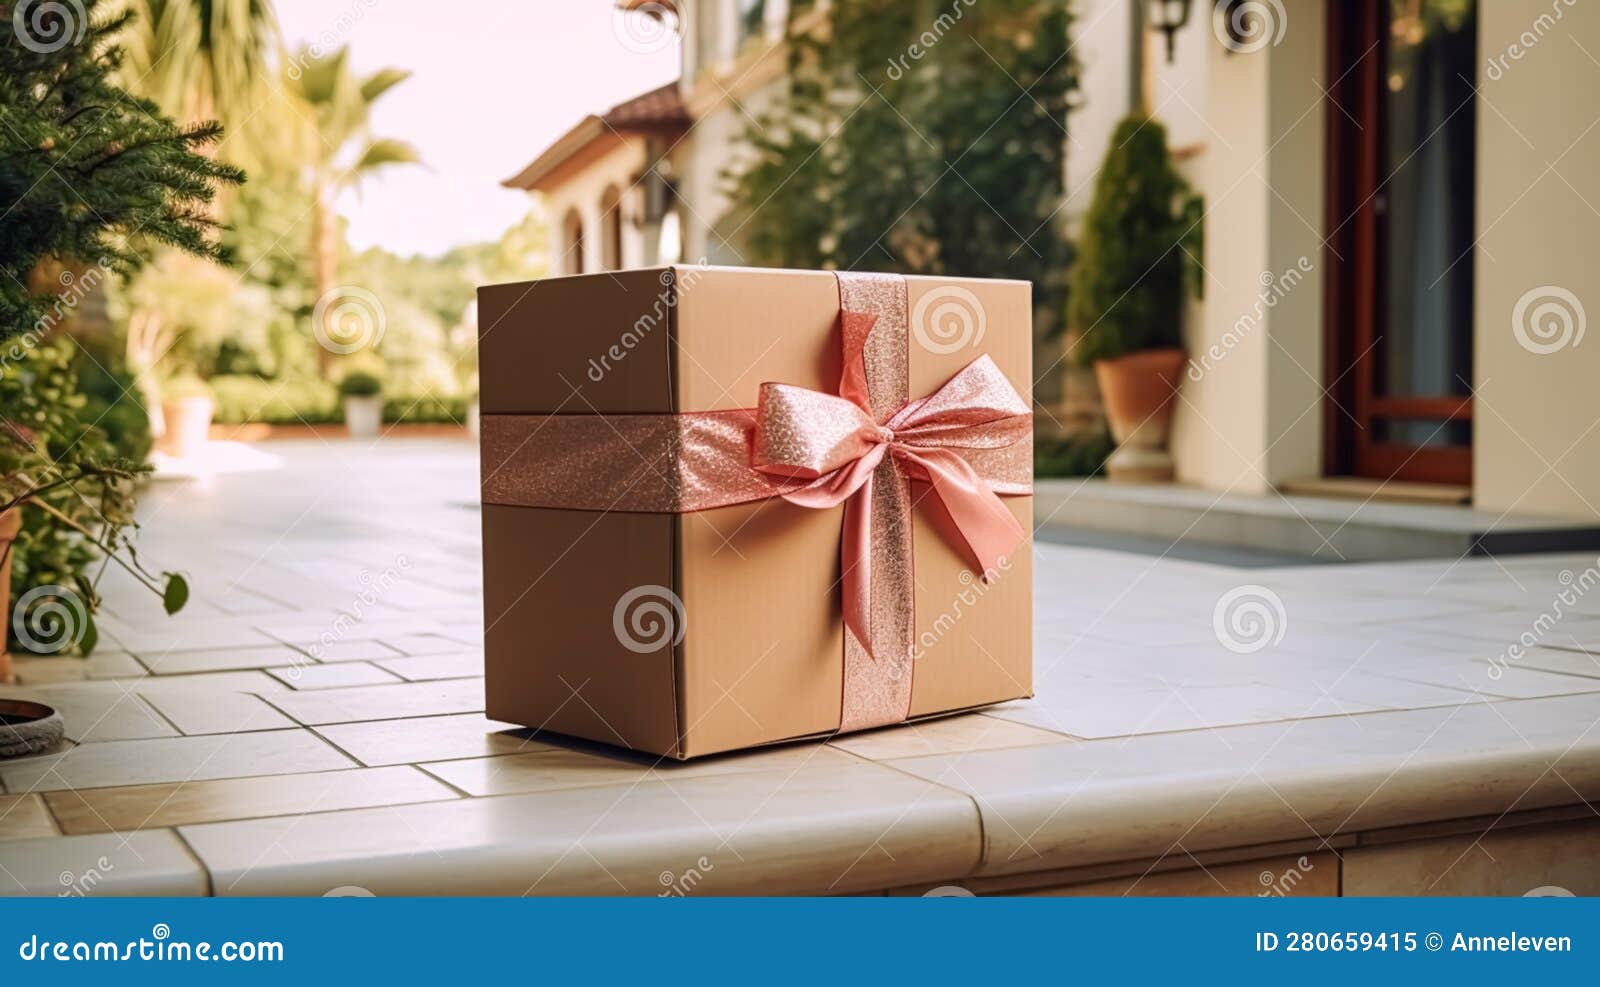 Elegant Gift Shop Delivery, Postal Service And Luxury Online